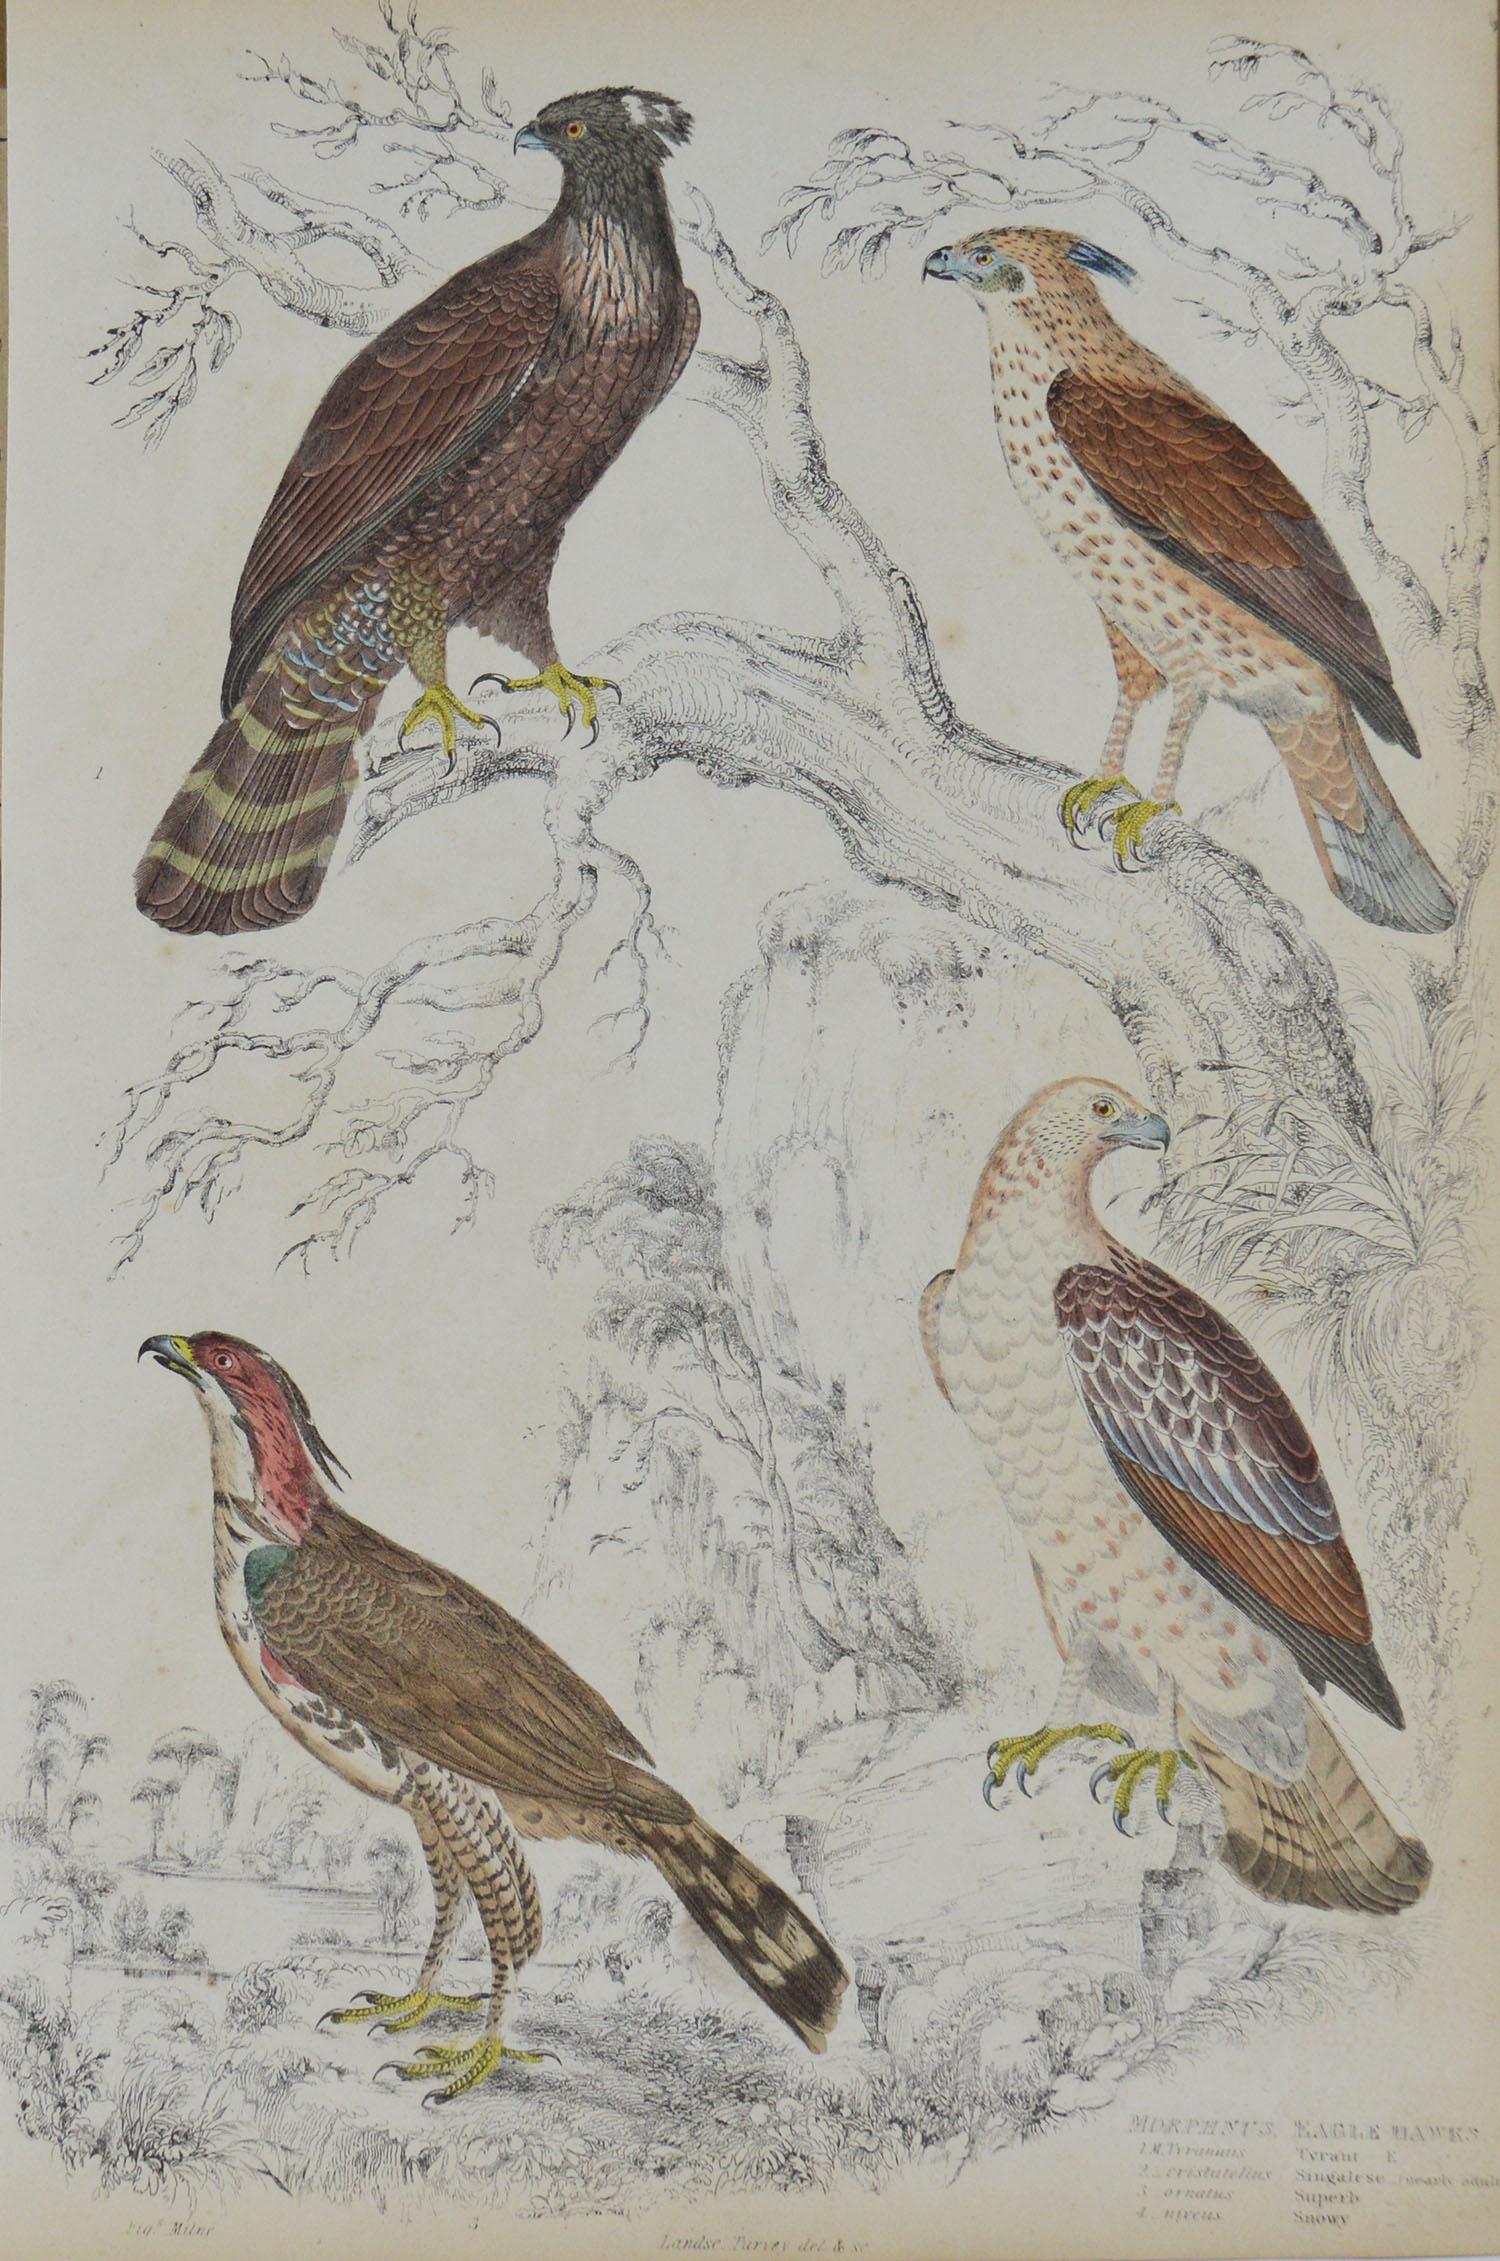 Paper Set of 8 Original Antique Prints of Birds of Prey, 1830s